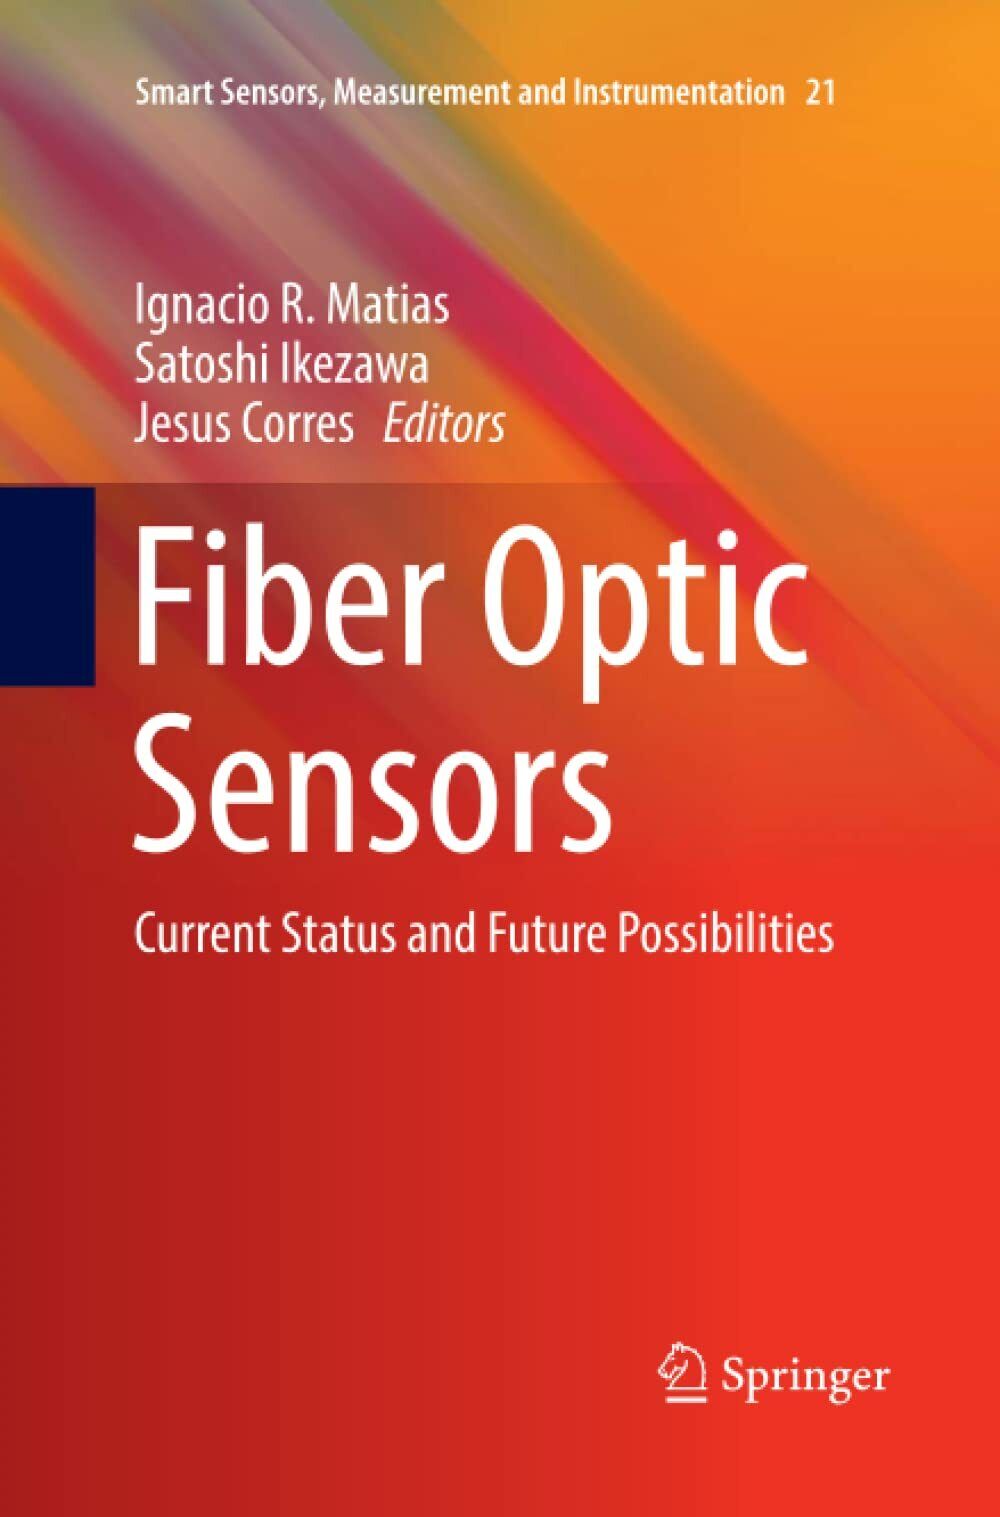 Fiber Optic Sensors - Ignacio R. Matias - Springer, 2018 libro usato